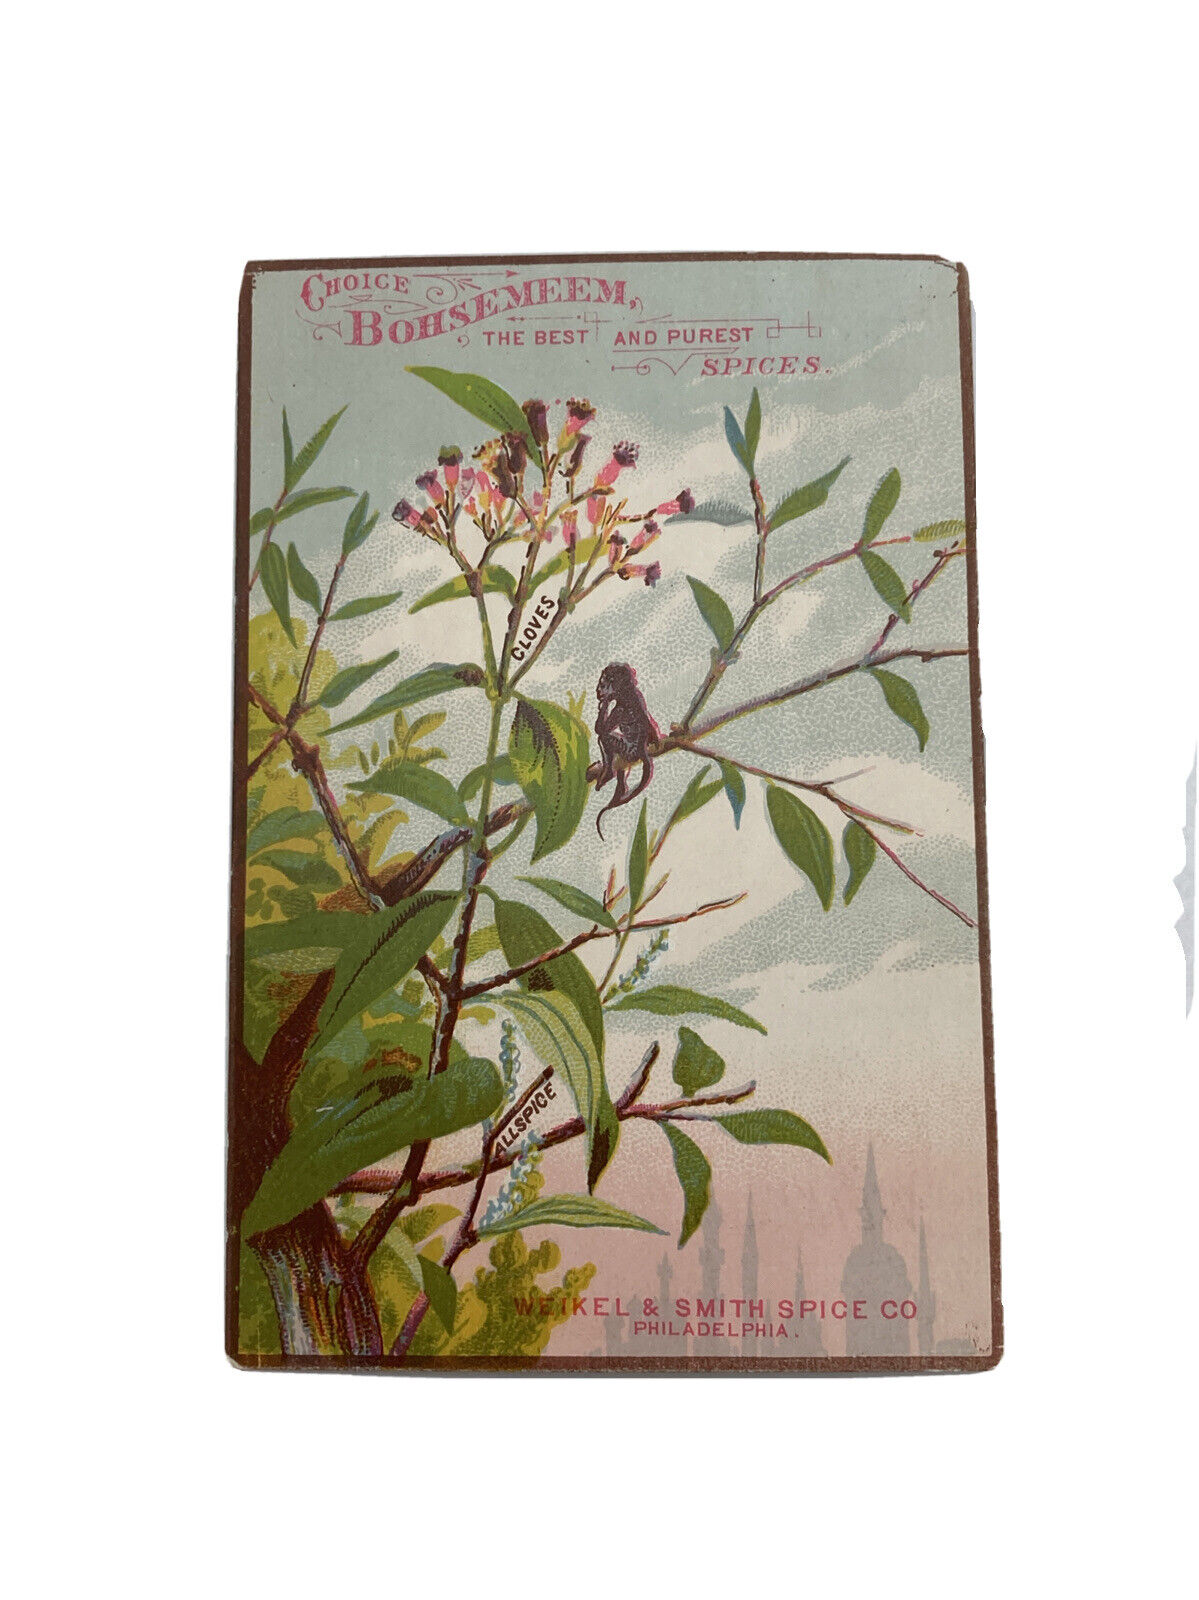 Antique Trade Card Bohsemeem Weikel & Smith Spice Co. Philadelphia